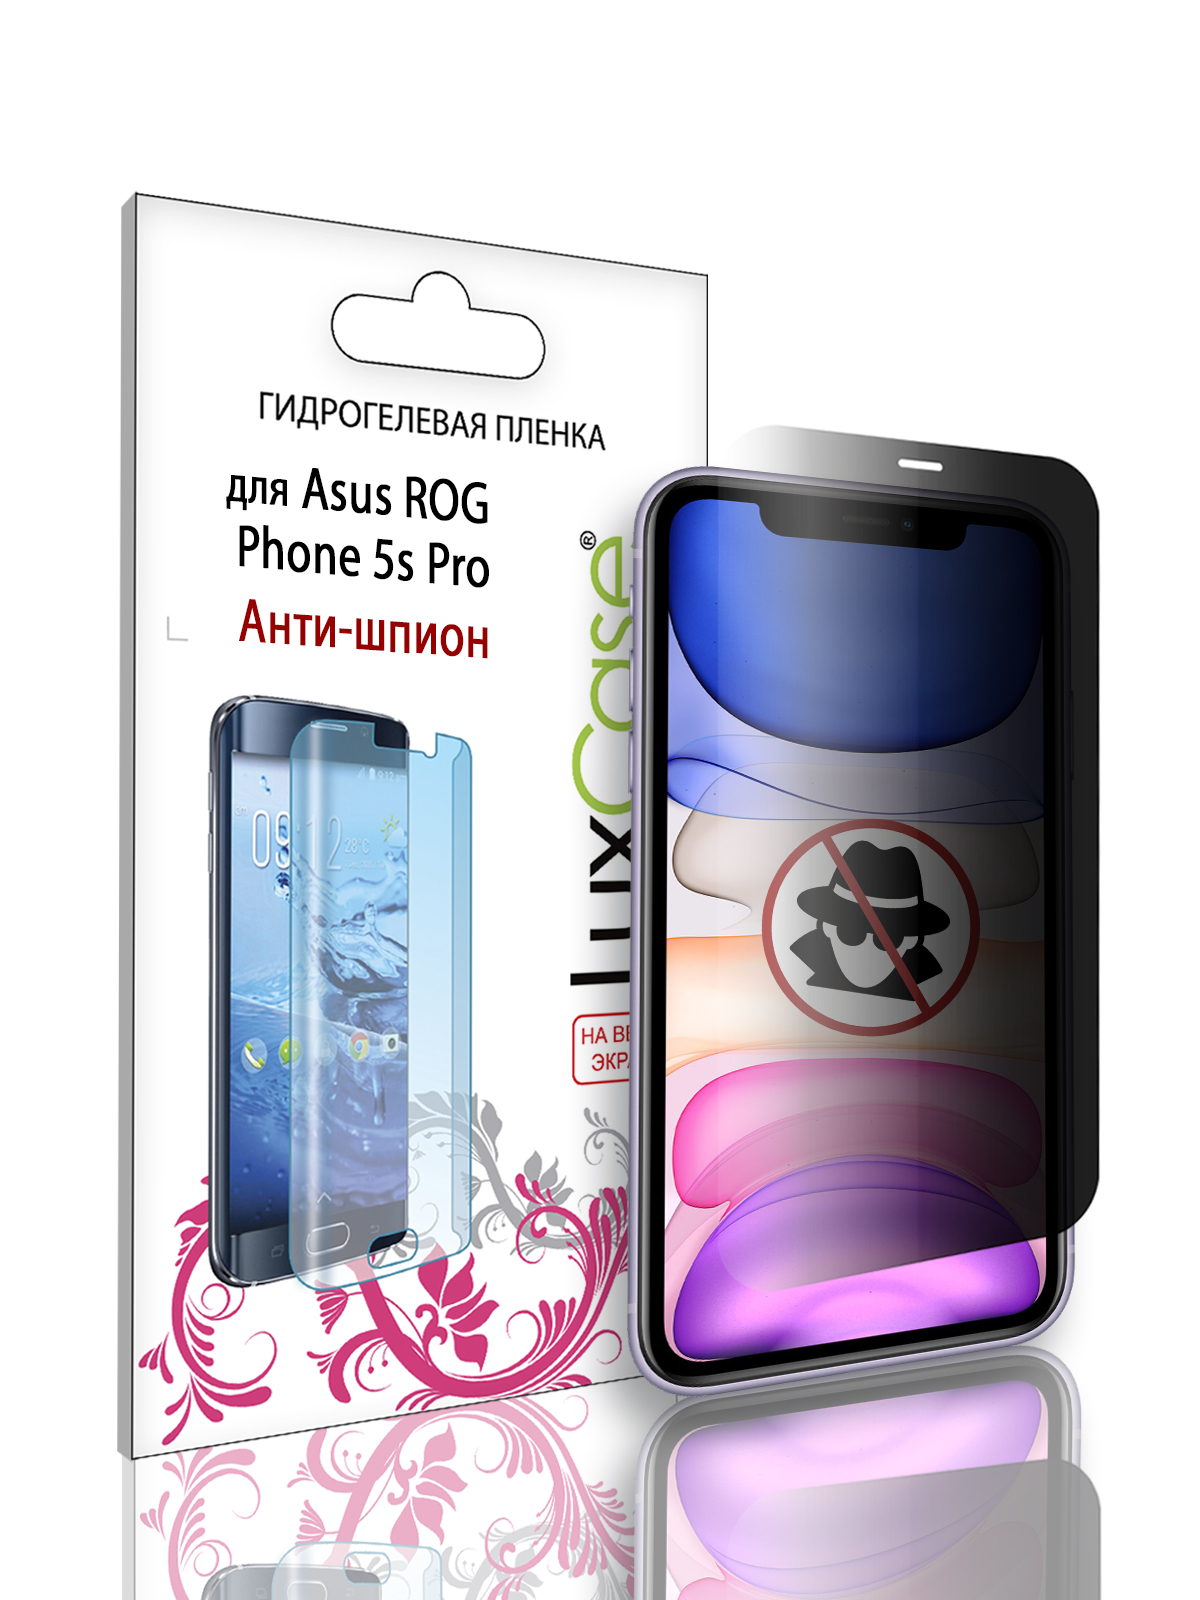 Гидрогелевая пленка LuxCase для Asus ROG Phone 5s Pro, Антишпион, 0,14 мм, Front гидрогелевая защитная пленка антишпион anty spy анти шпион для nomi i5014 evo m4 матовая